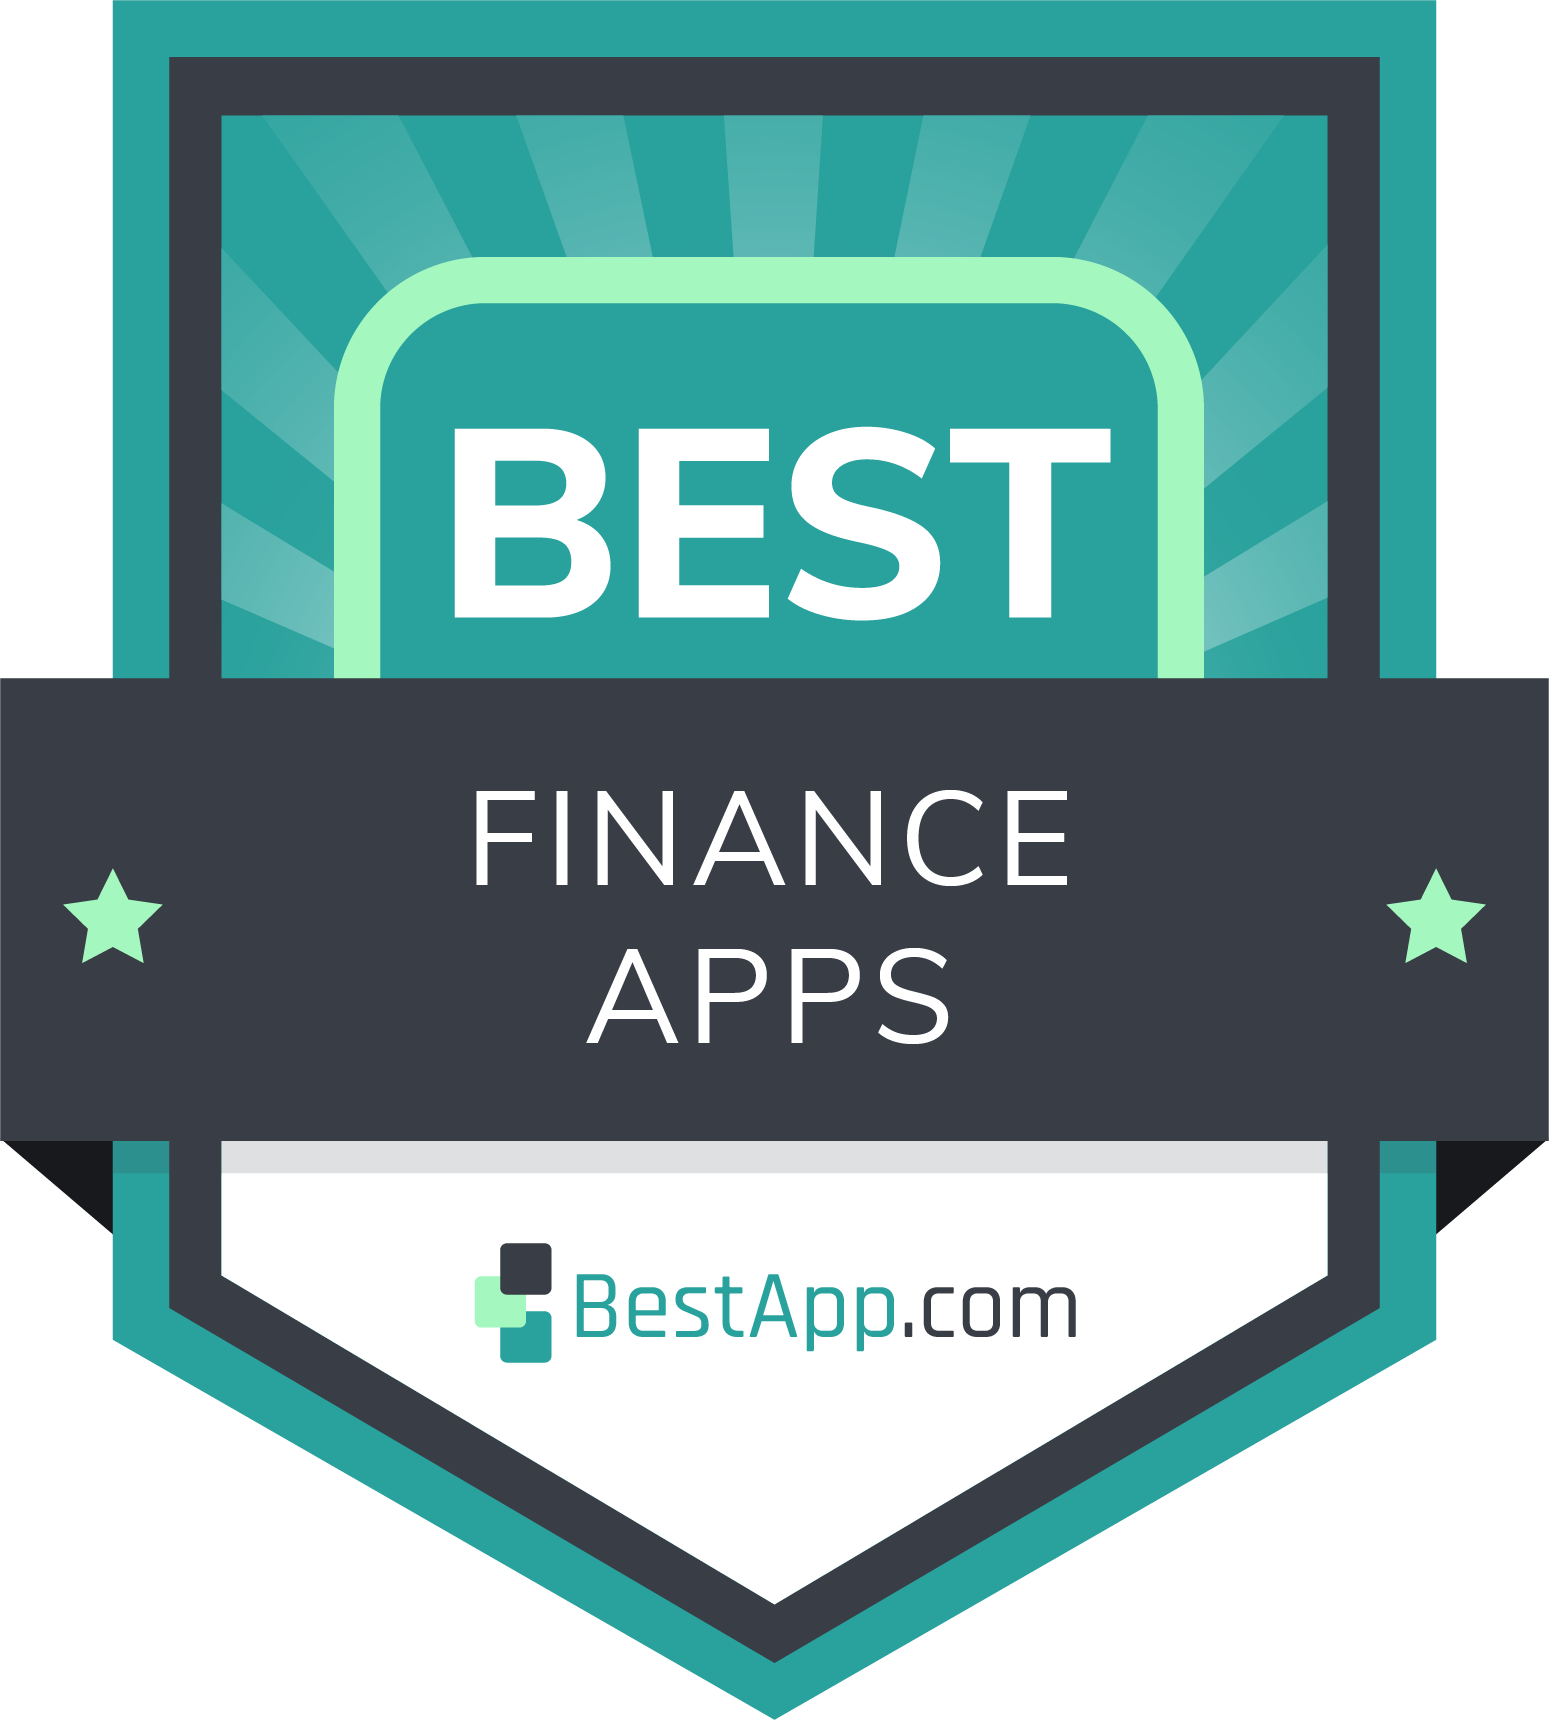 Best Finance Apps Badge